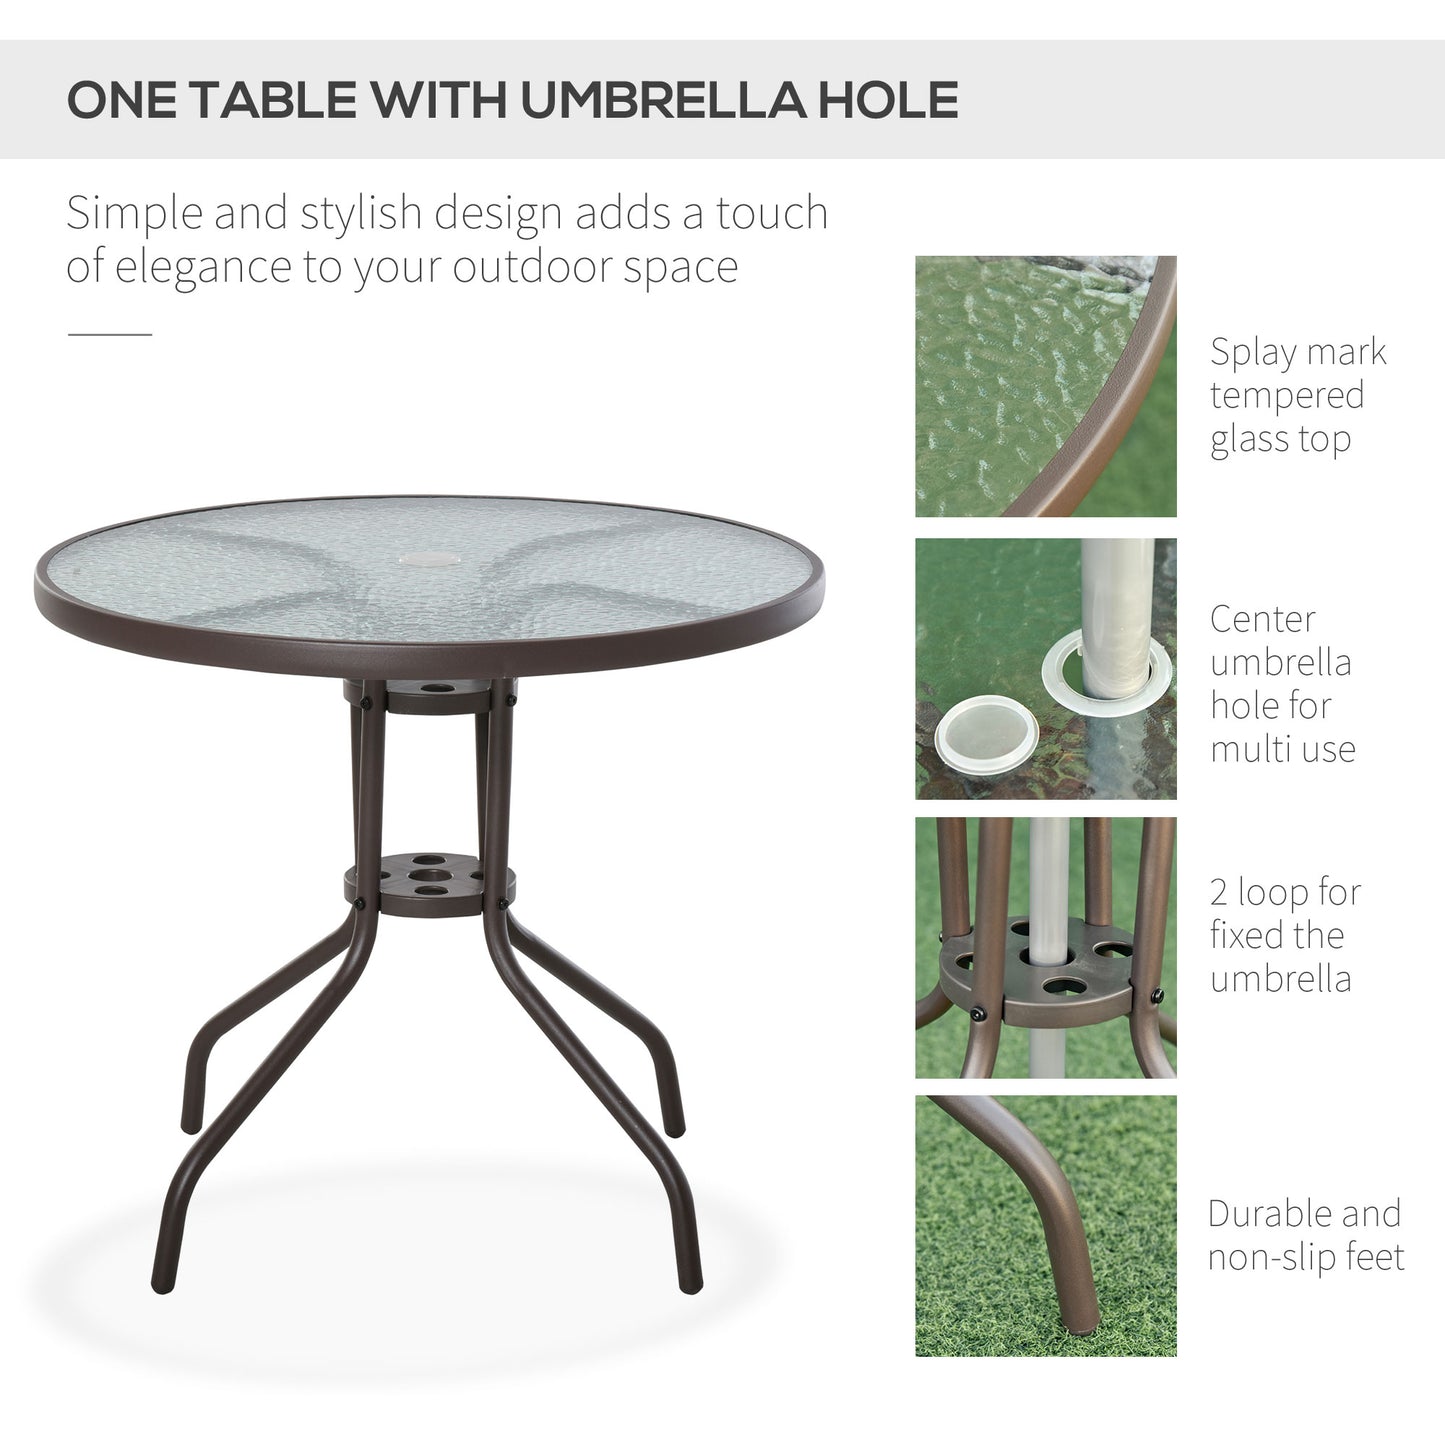 Outsunny Garden Patio Texteline Folding Chairs Plus Table and Parasol Furniture Bistro Set 6 Pieces - Black/Cream